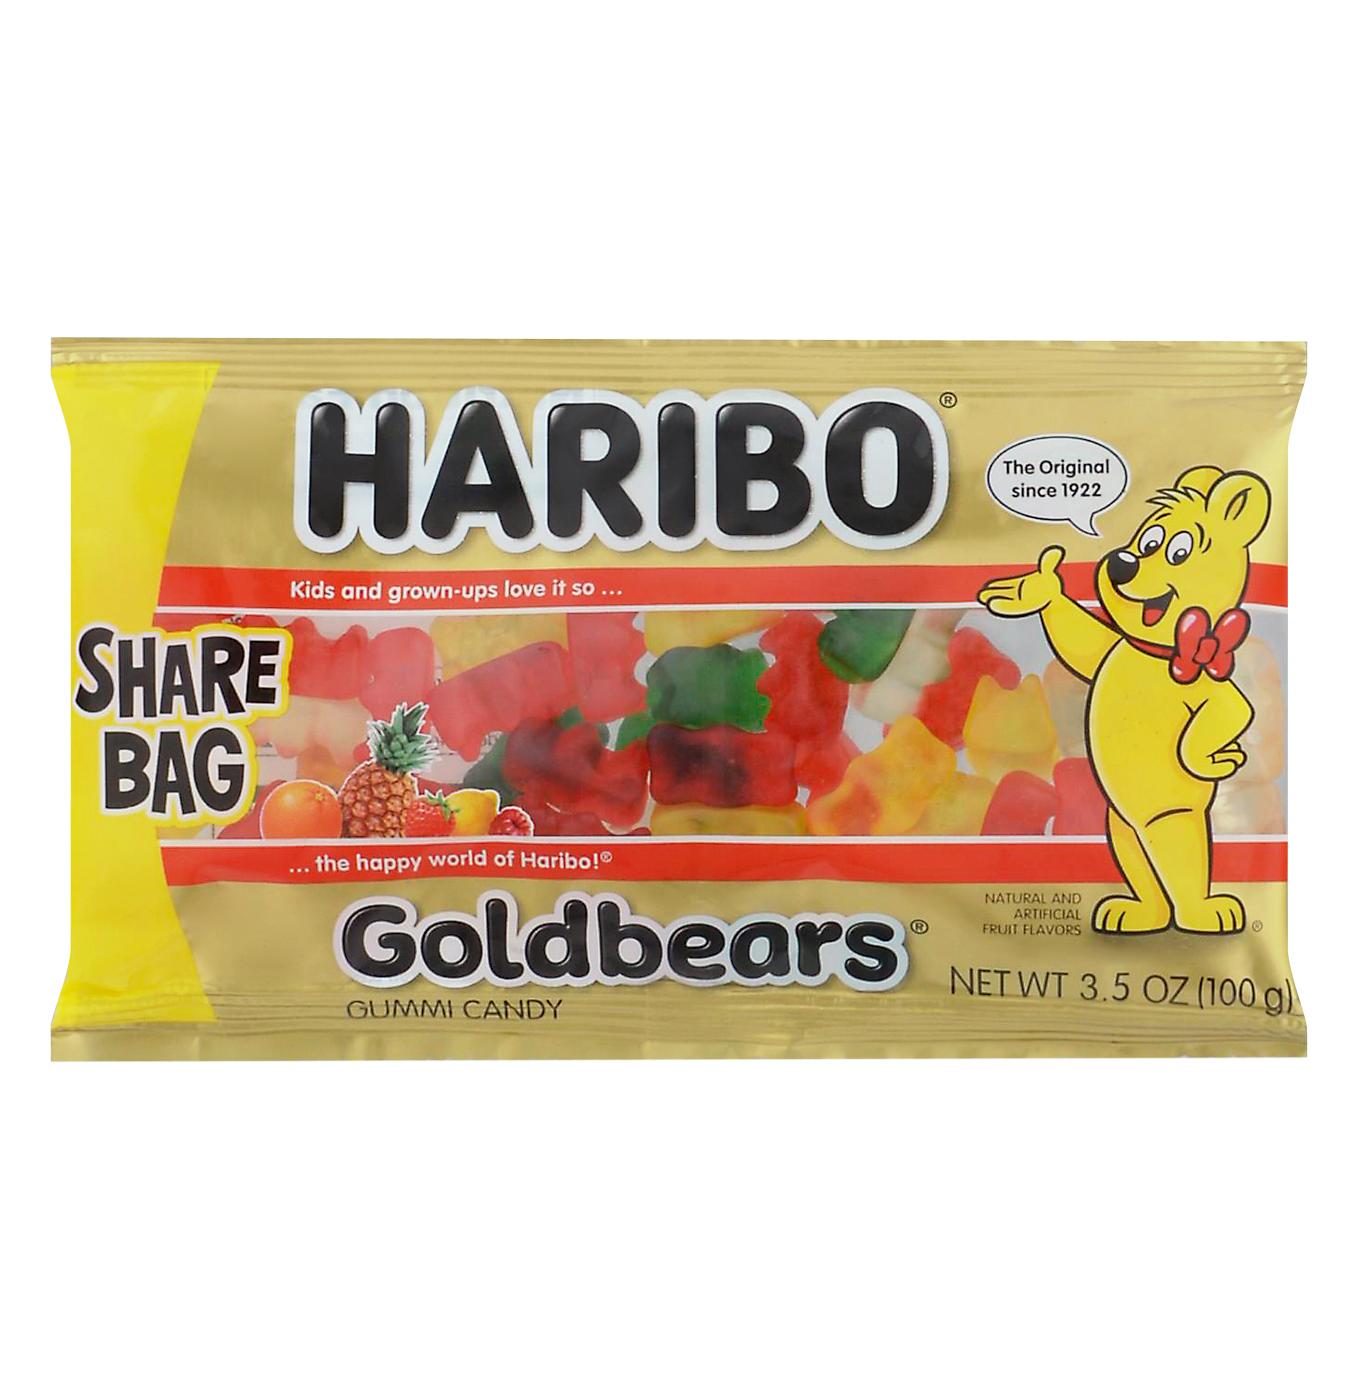 Haribo Gold Bears Gummi Candy - Share Bag; image 1 of 2